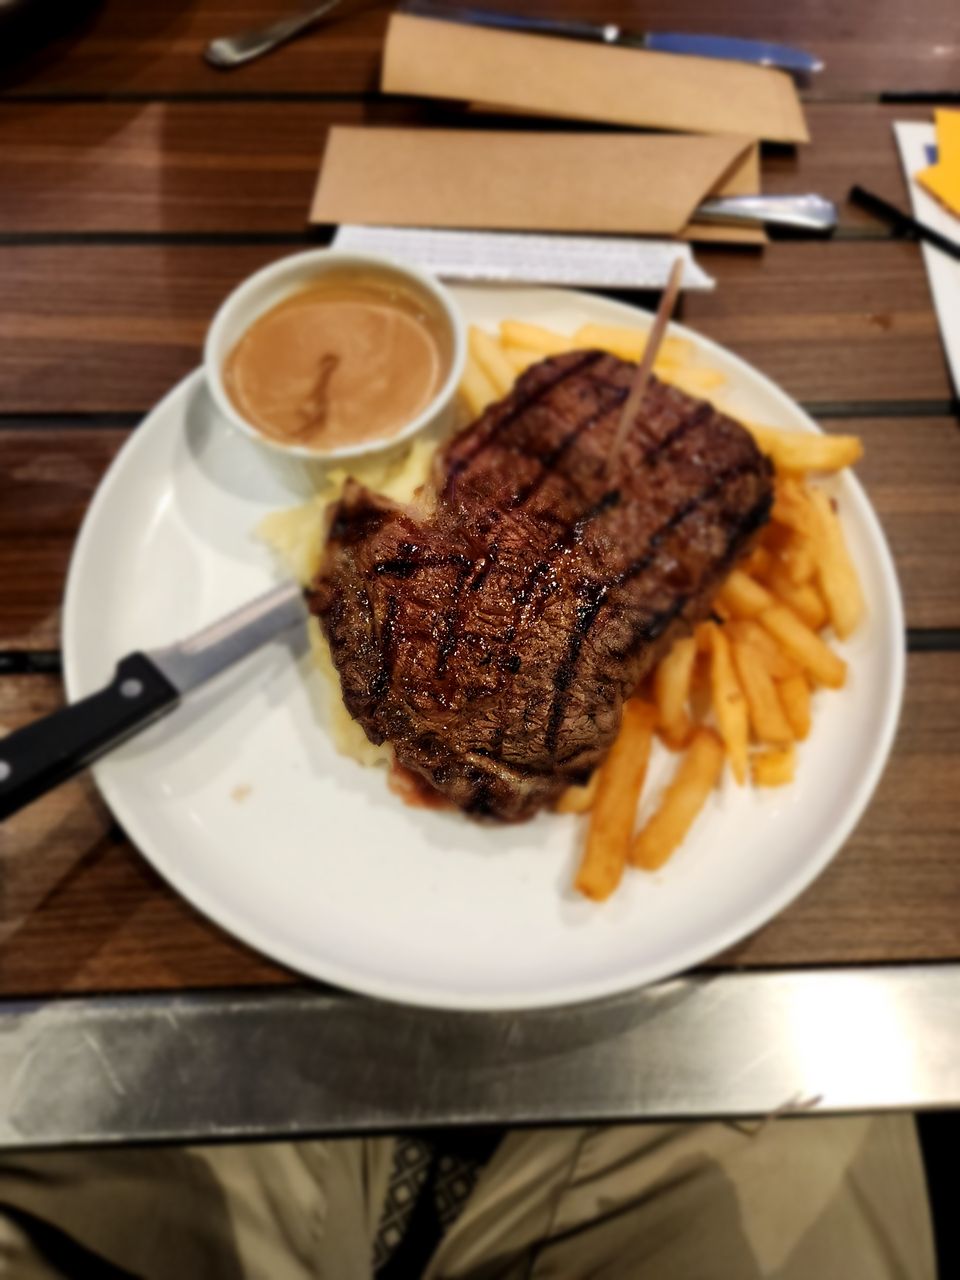 Food Review: Steak